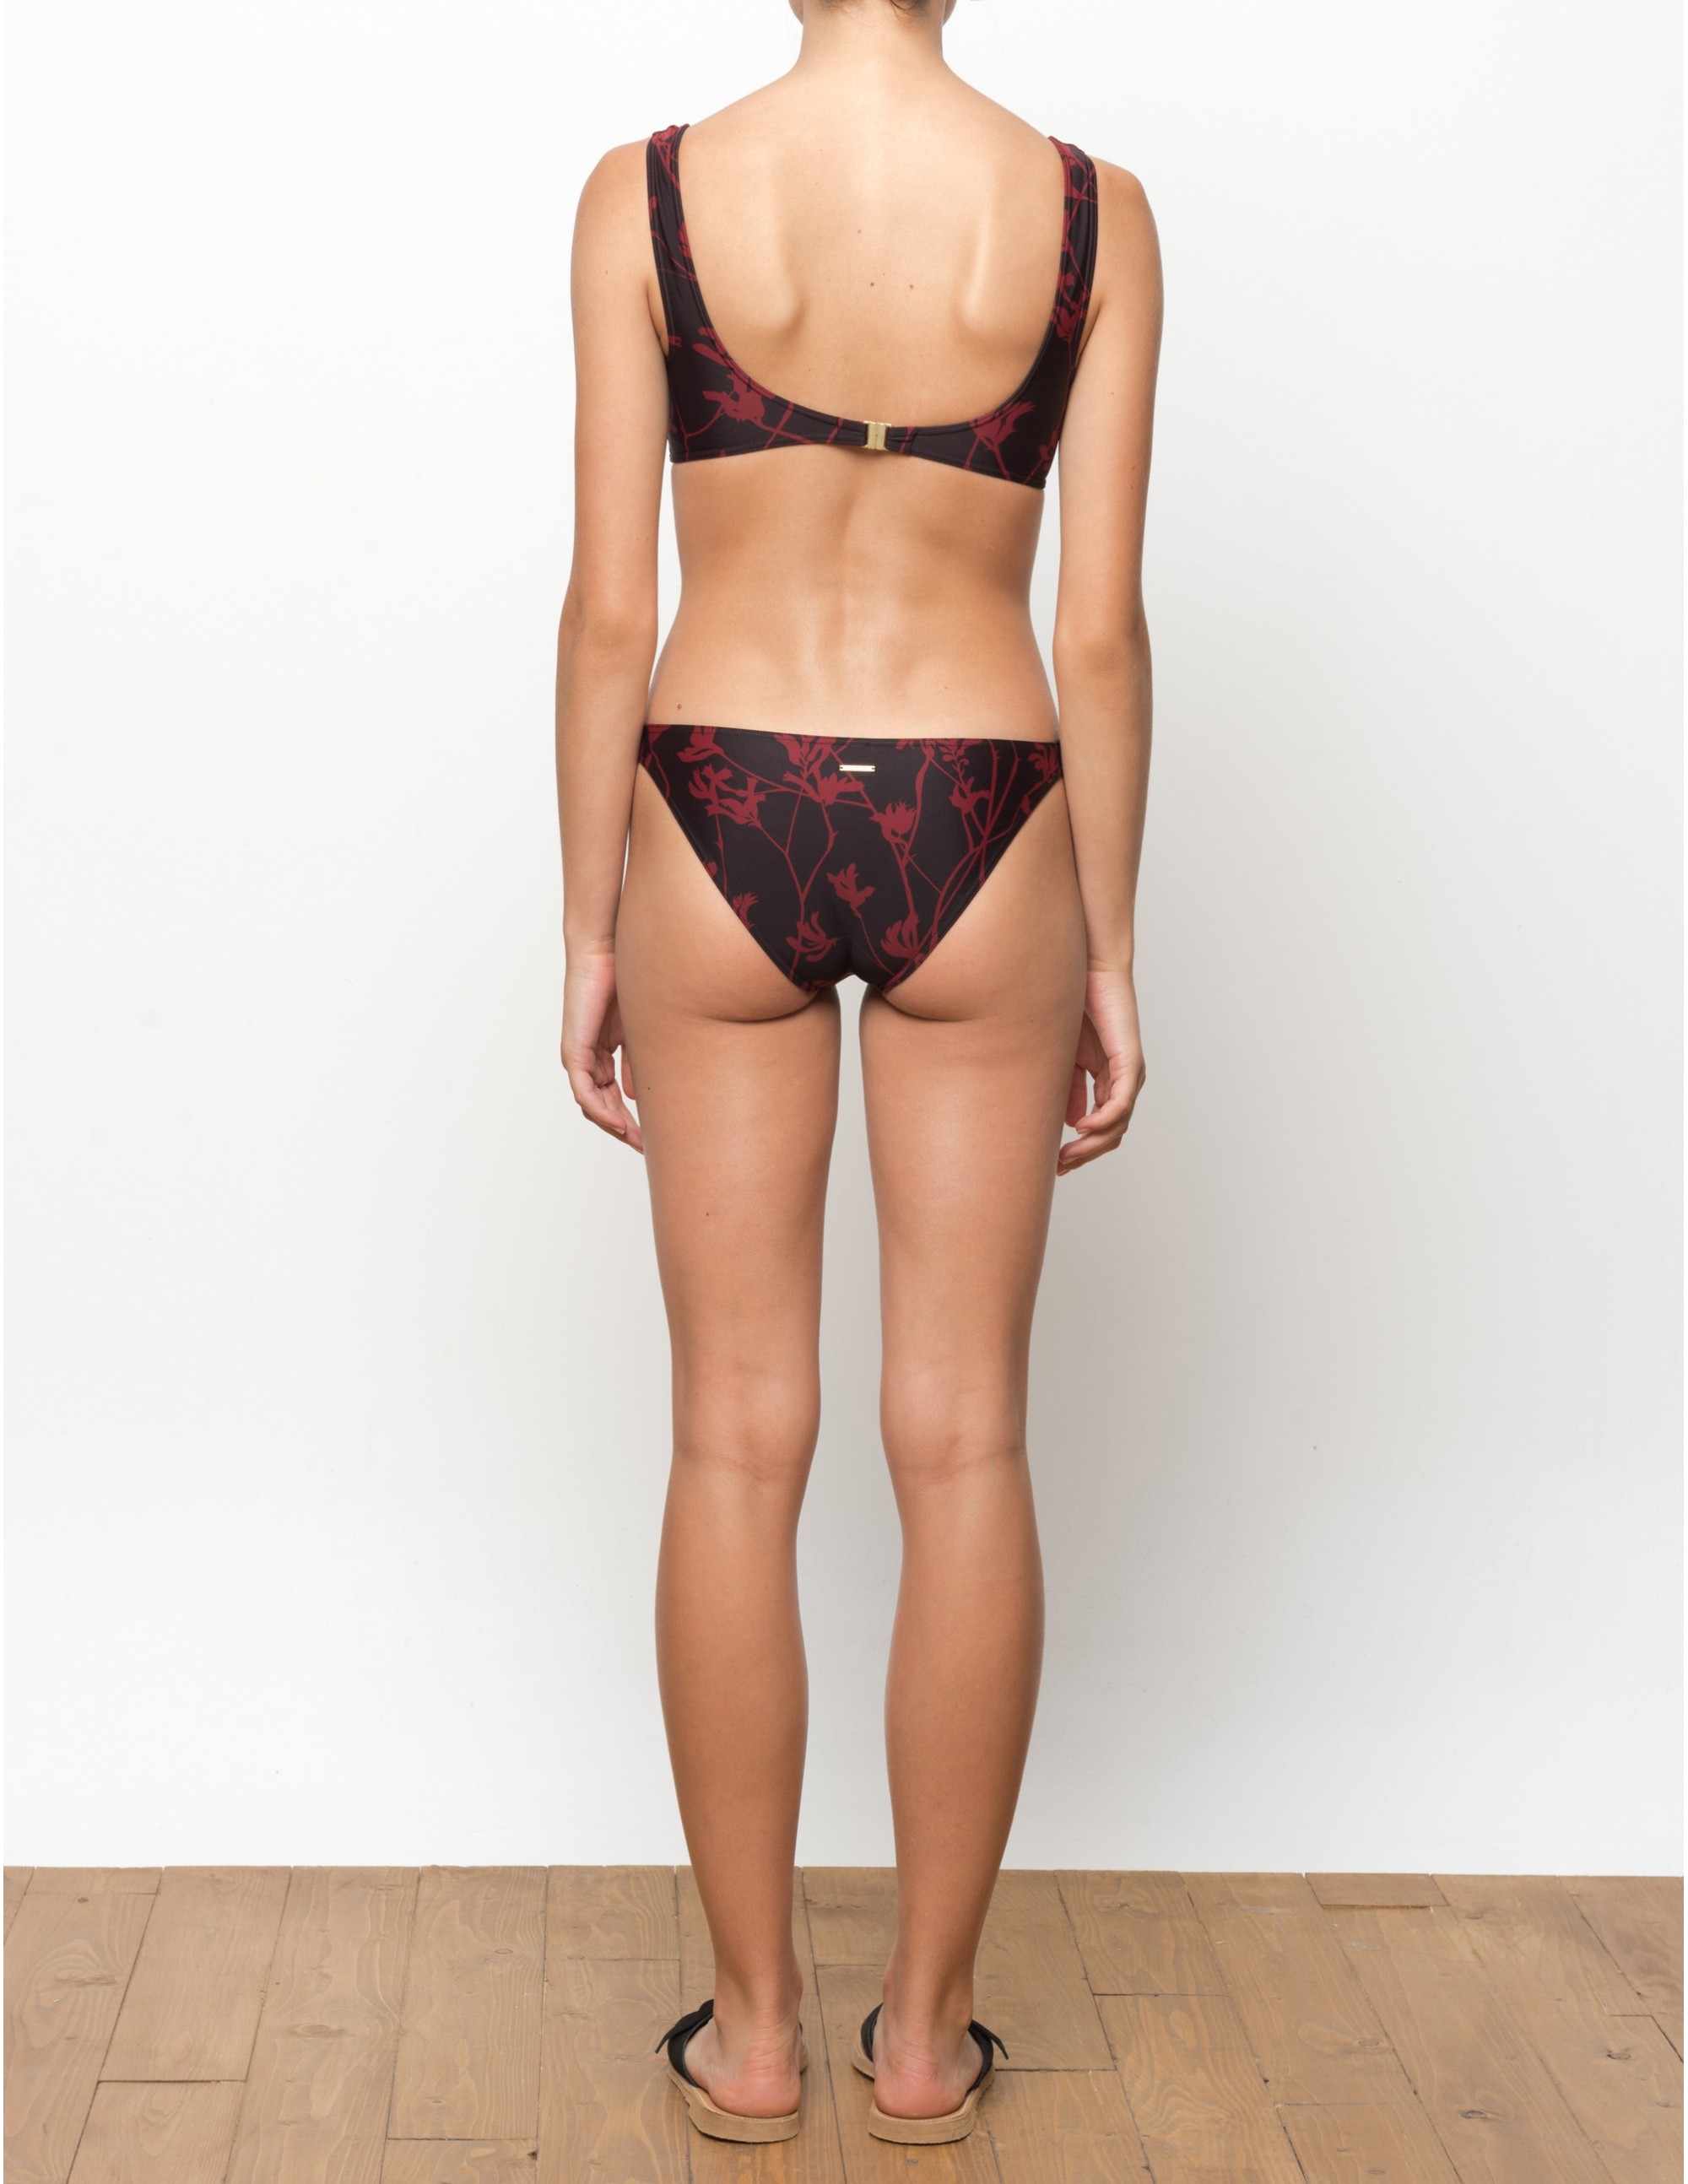 PARAISO bikini bottom - FLAME LILLY